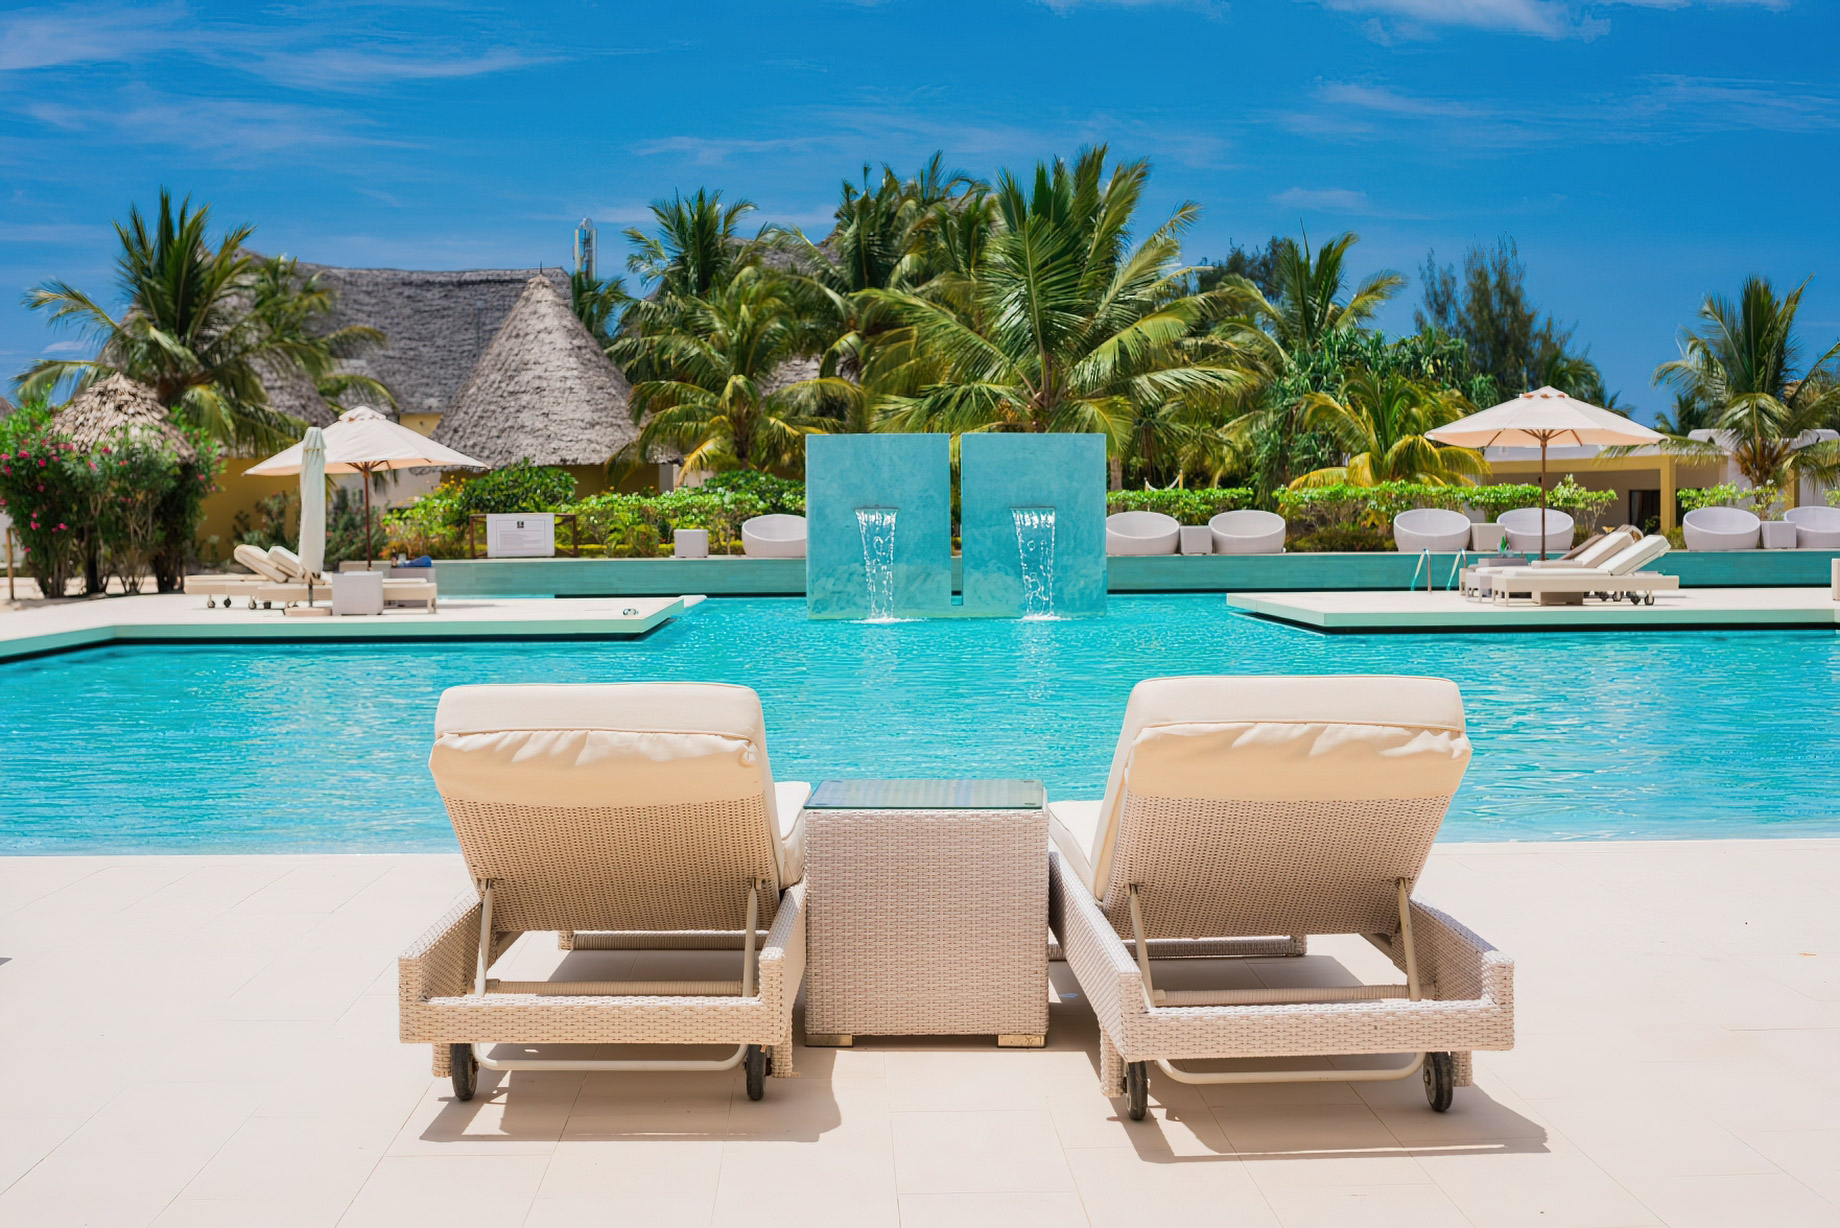 Gold Zanzibar Beach House & Spa Resort - Nungwi, Zanzibar, Tanzania - Pool Deck Chairs